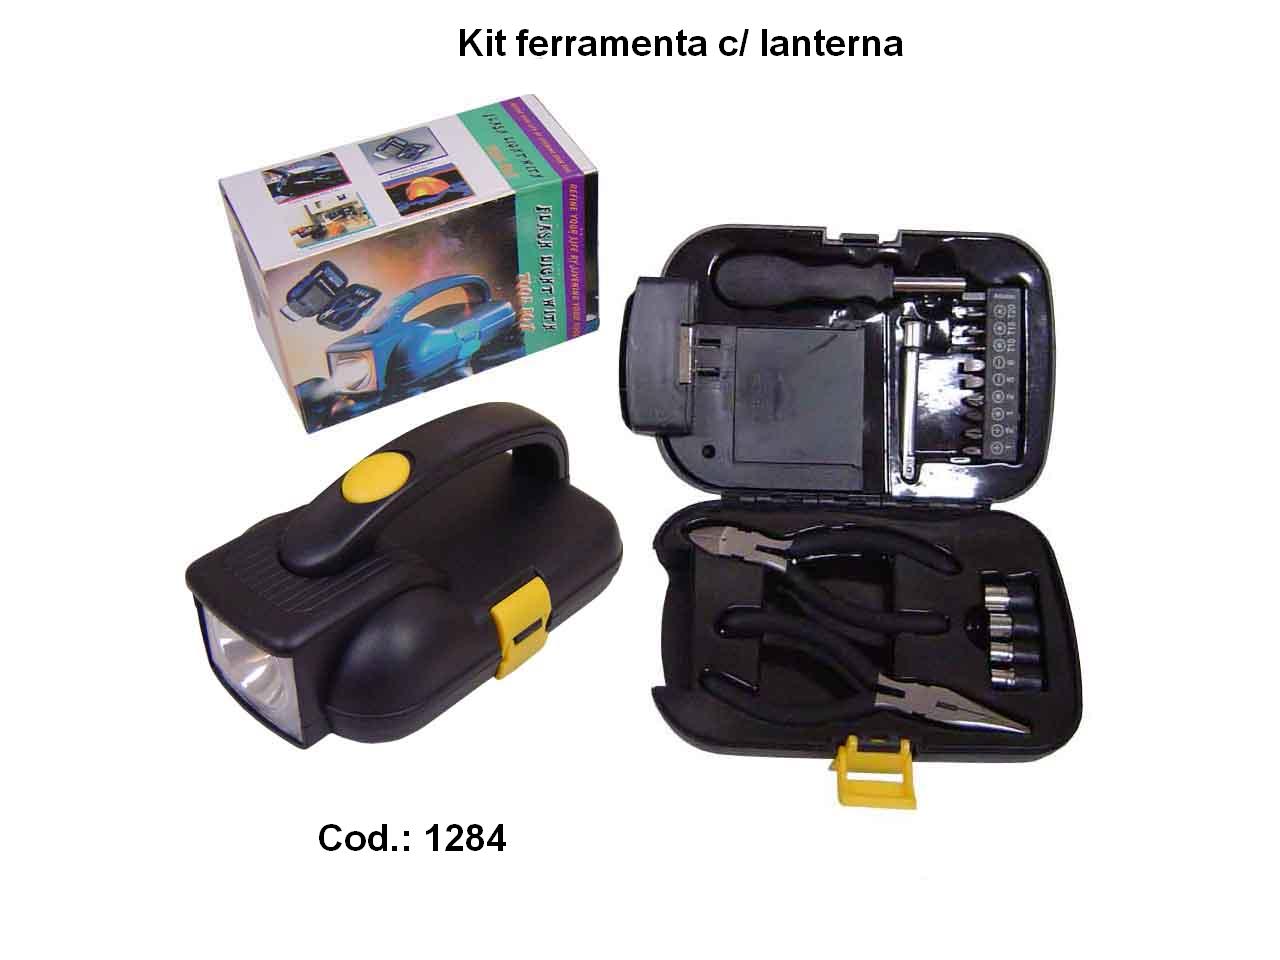 Kit ferramentas c/ lanterna (1284)